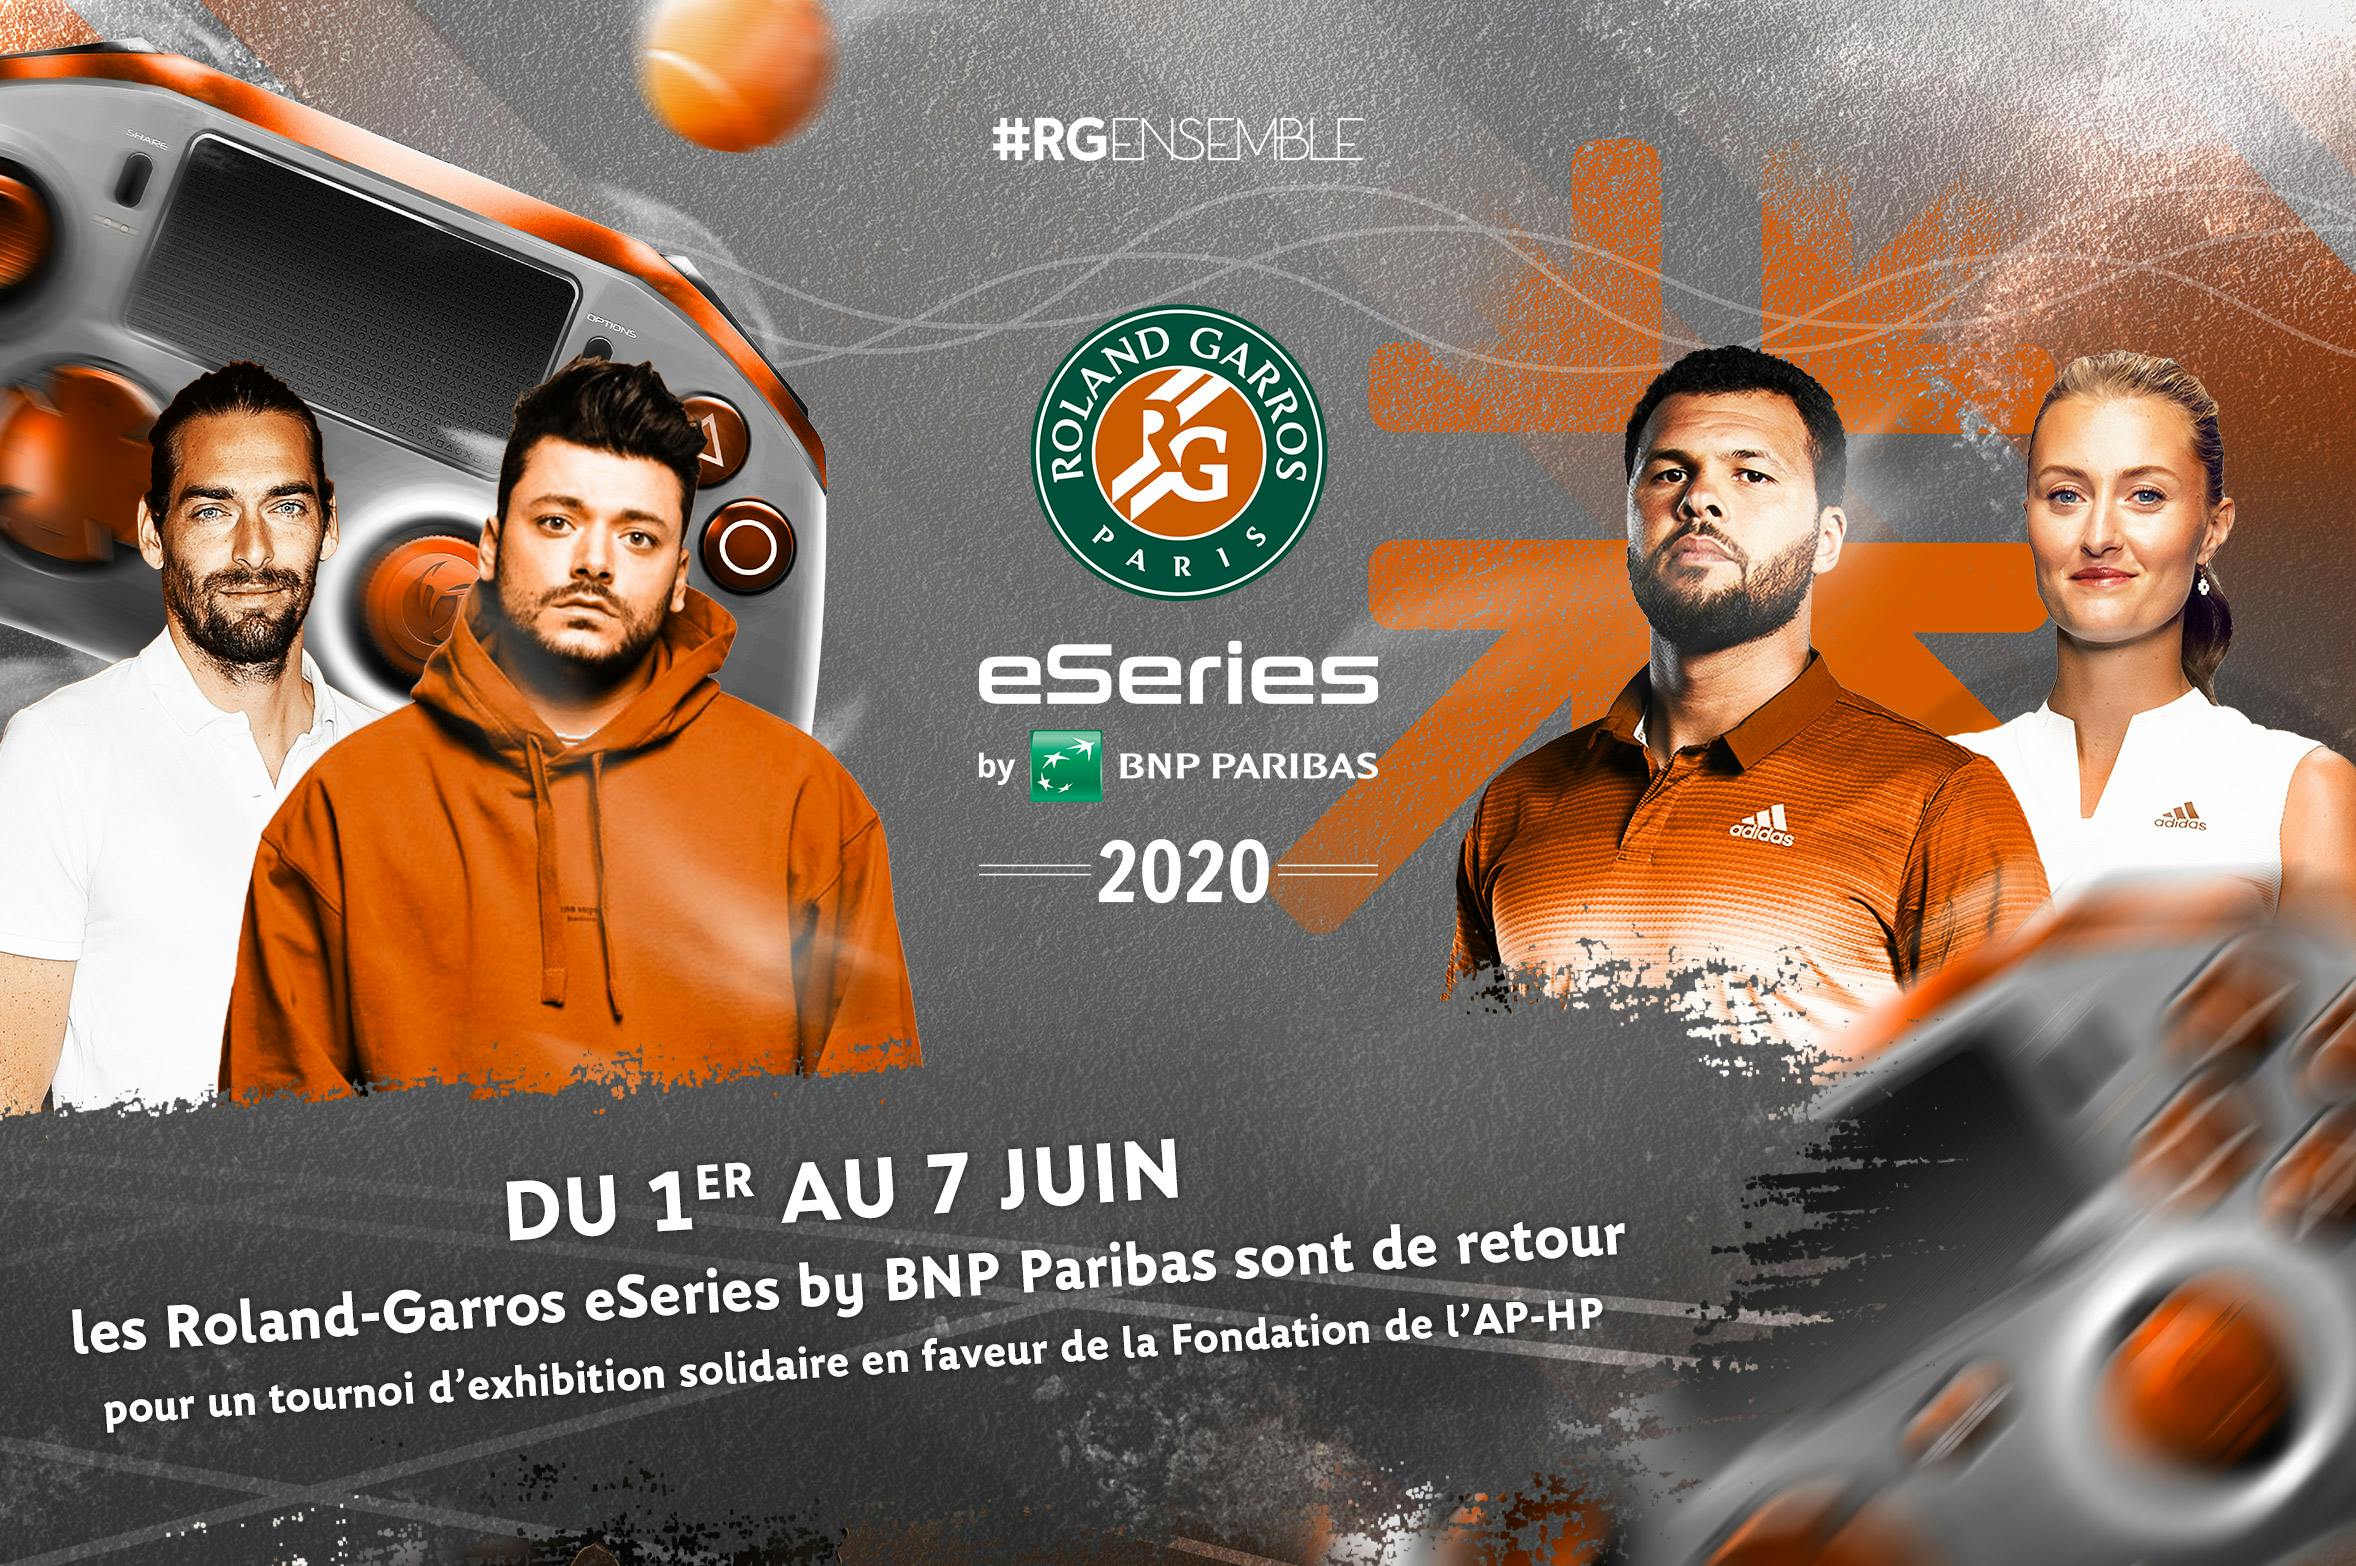 Roland-Garros eSeries by BNP Paribas 2020